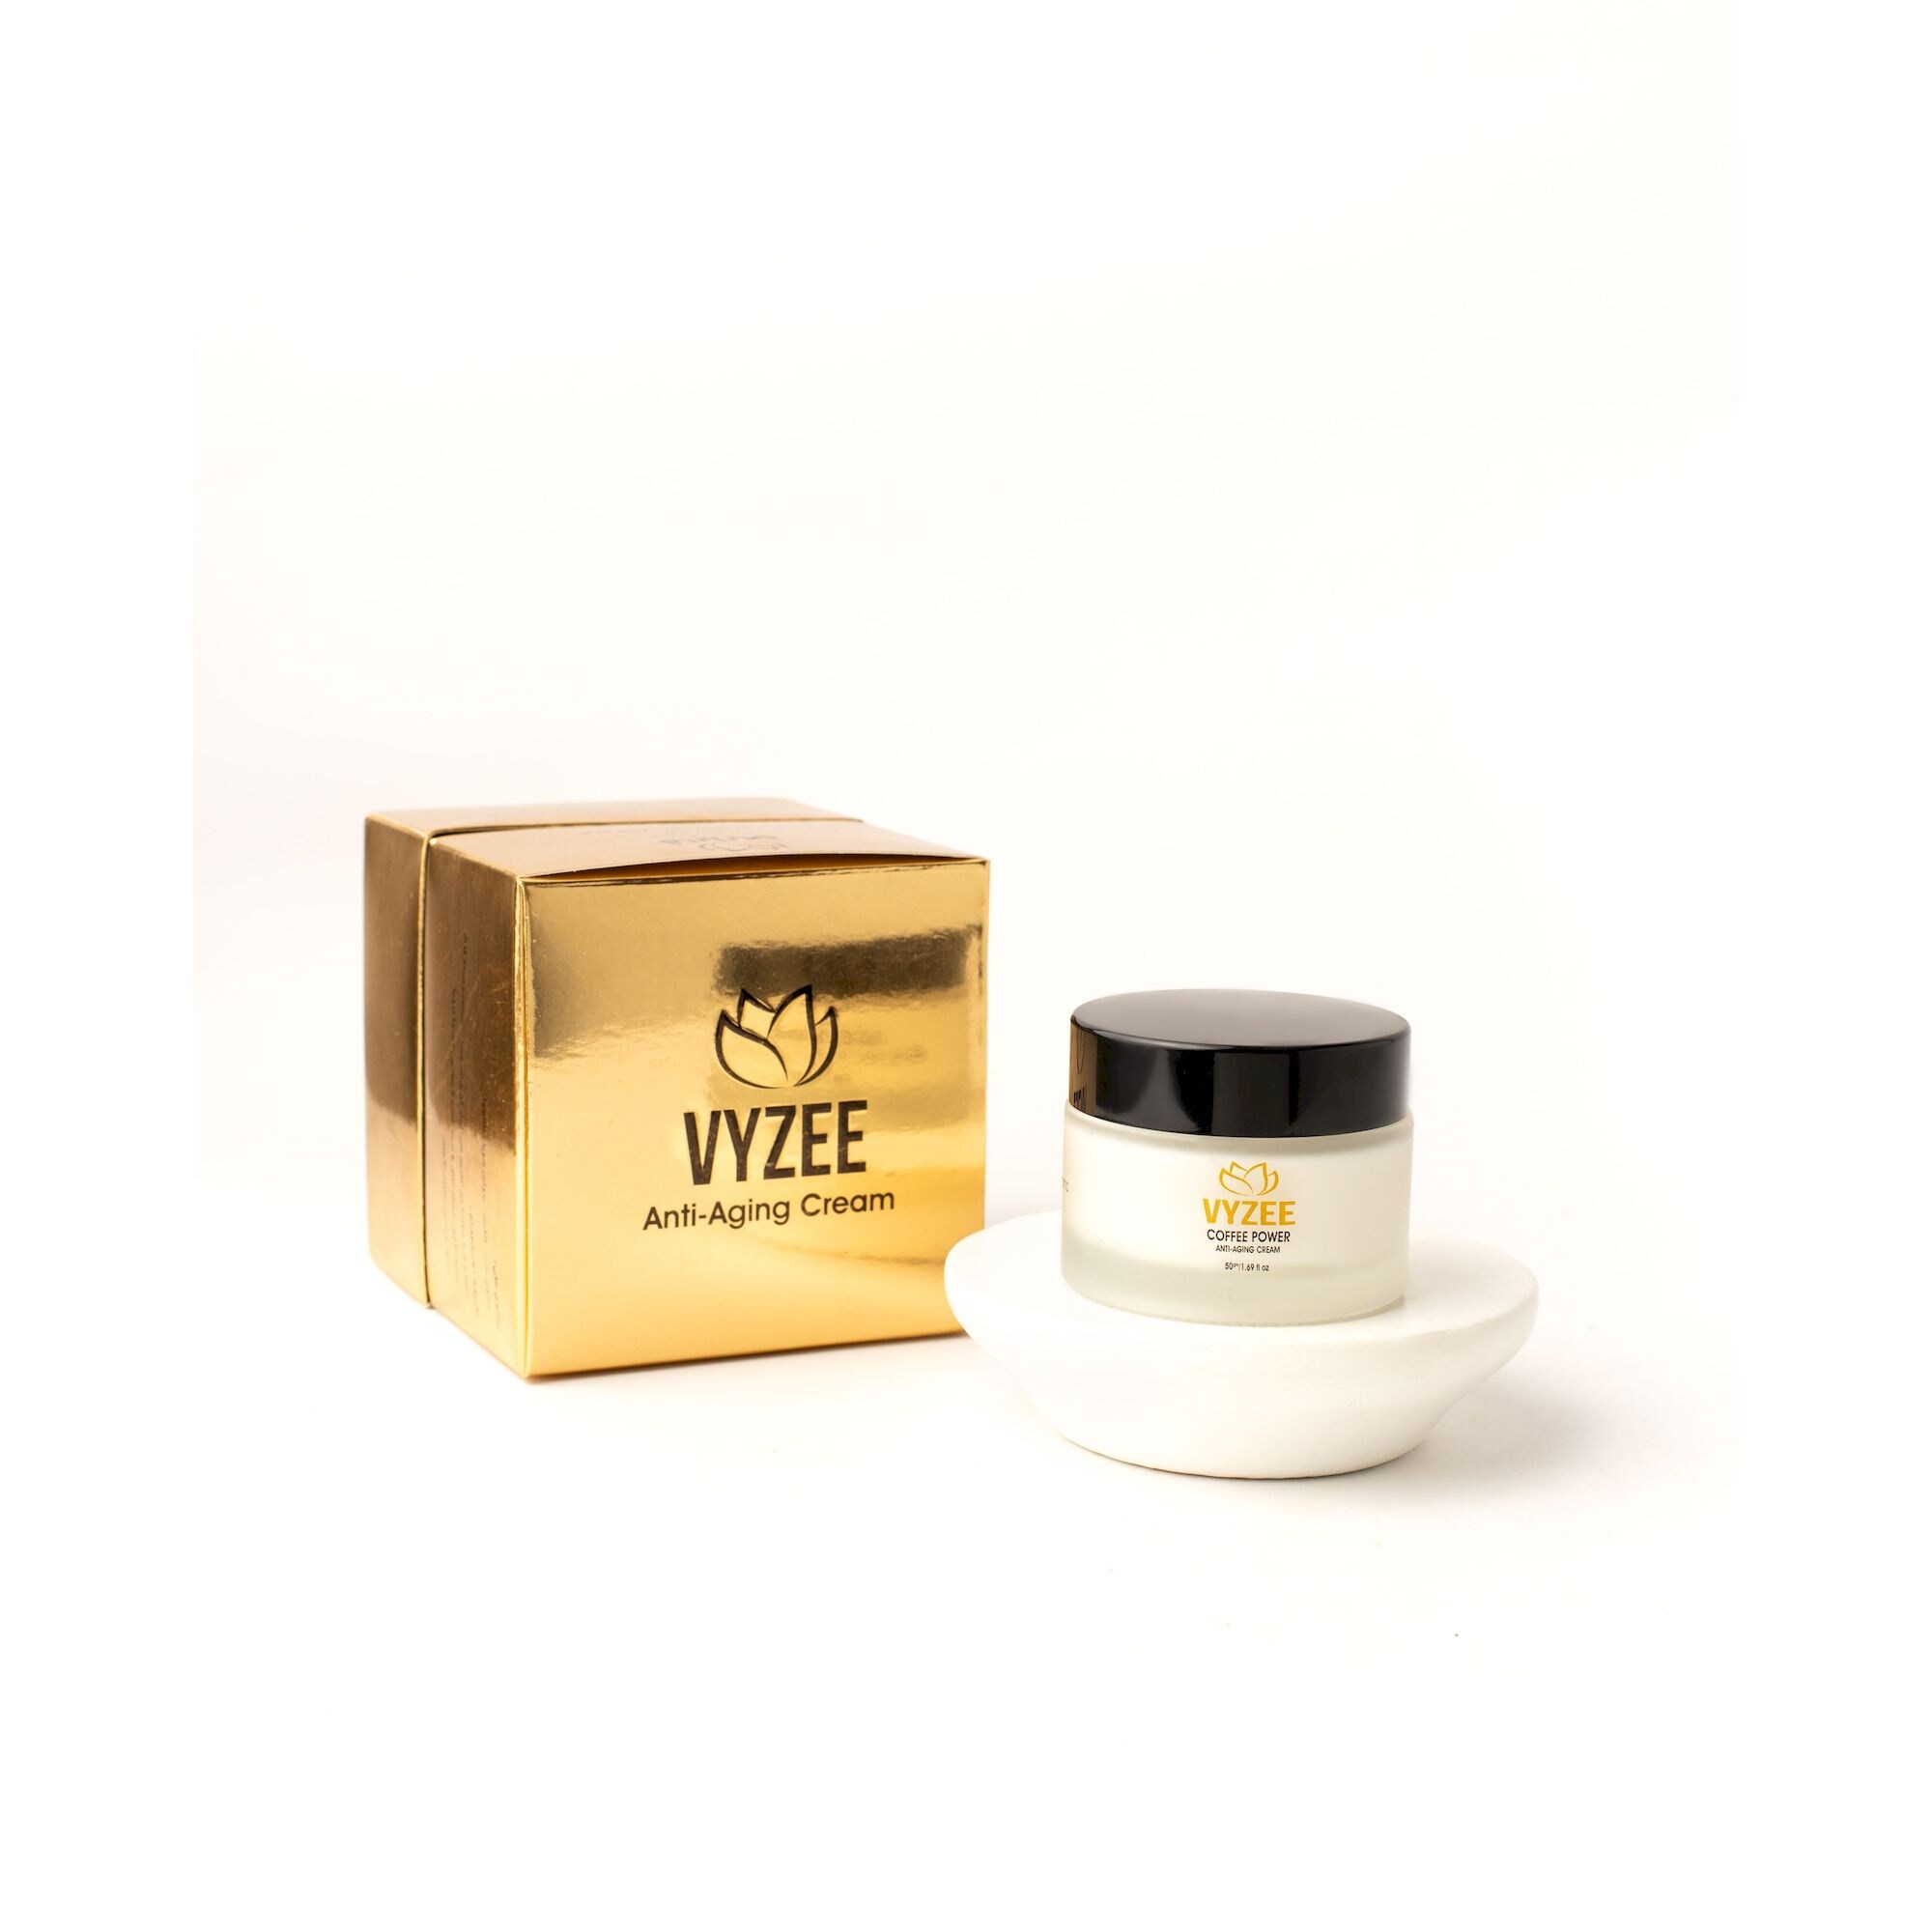 Vyzee Anti-Aging Cream, 50g, White